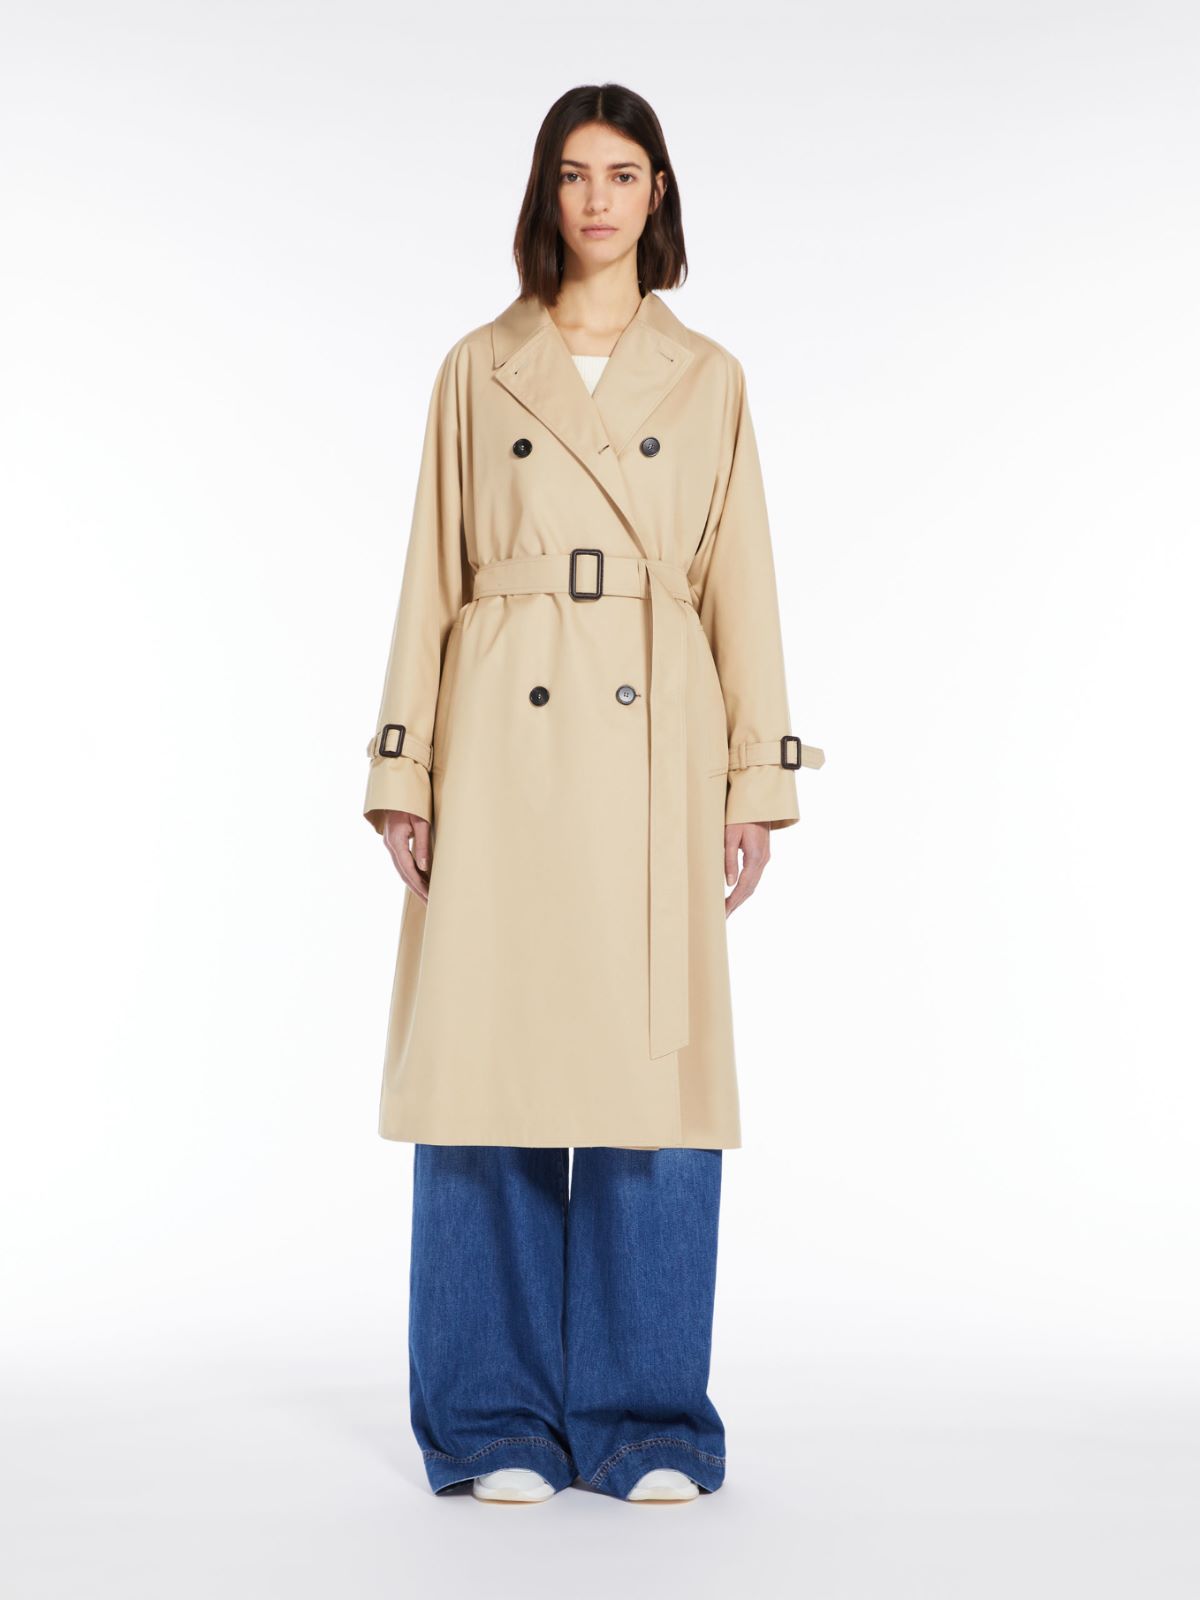 Reversible, water-resistant cotton trench coat - HONEY - Weekend Max Mara - 2